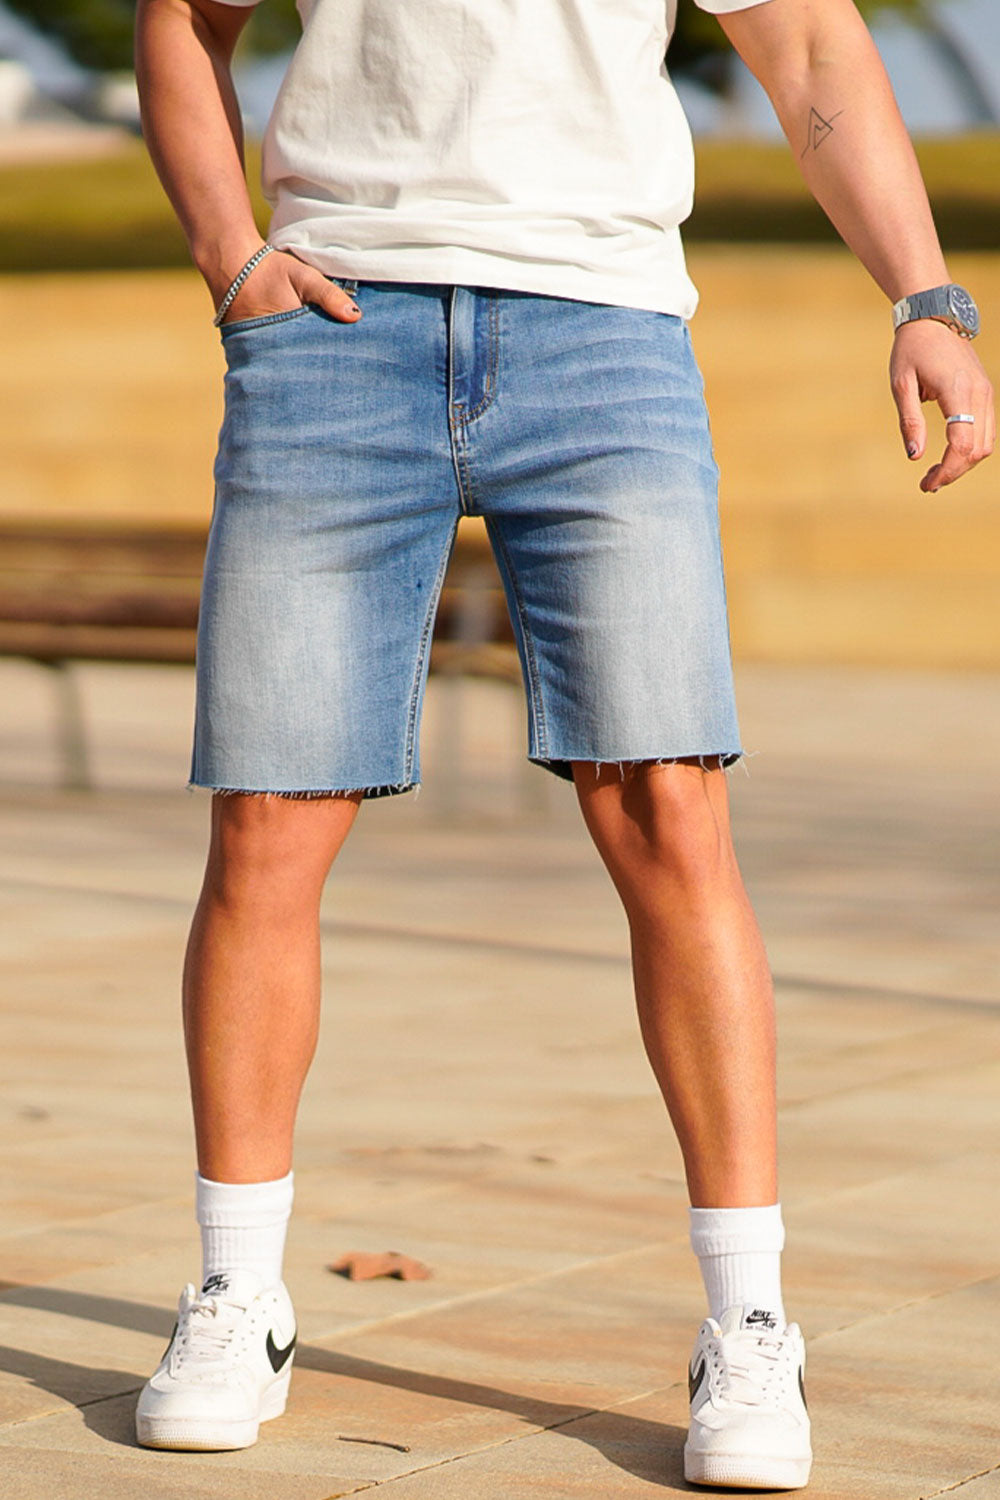 guys blue jean shorts